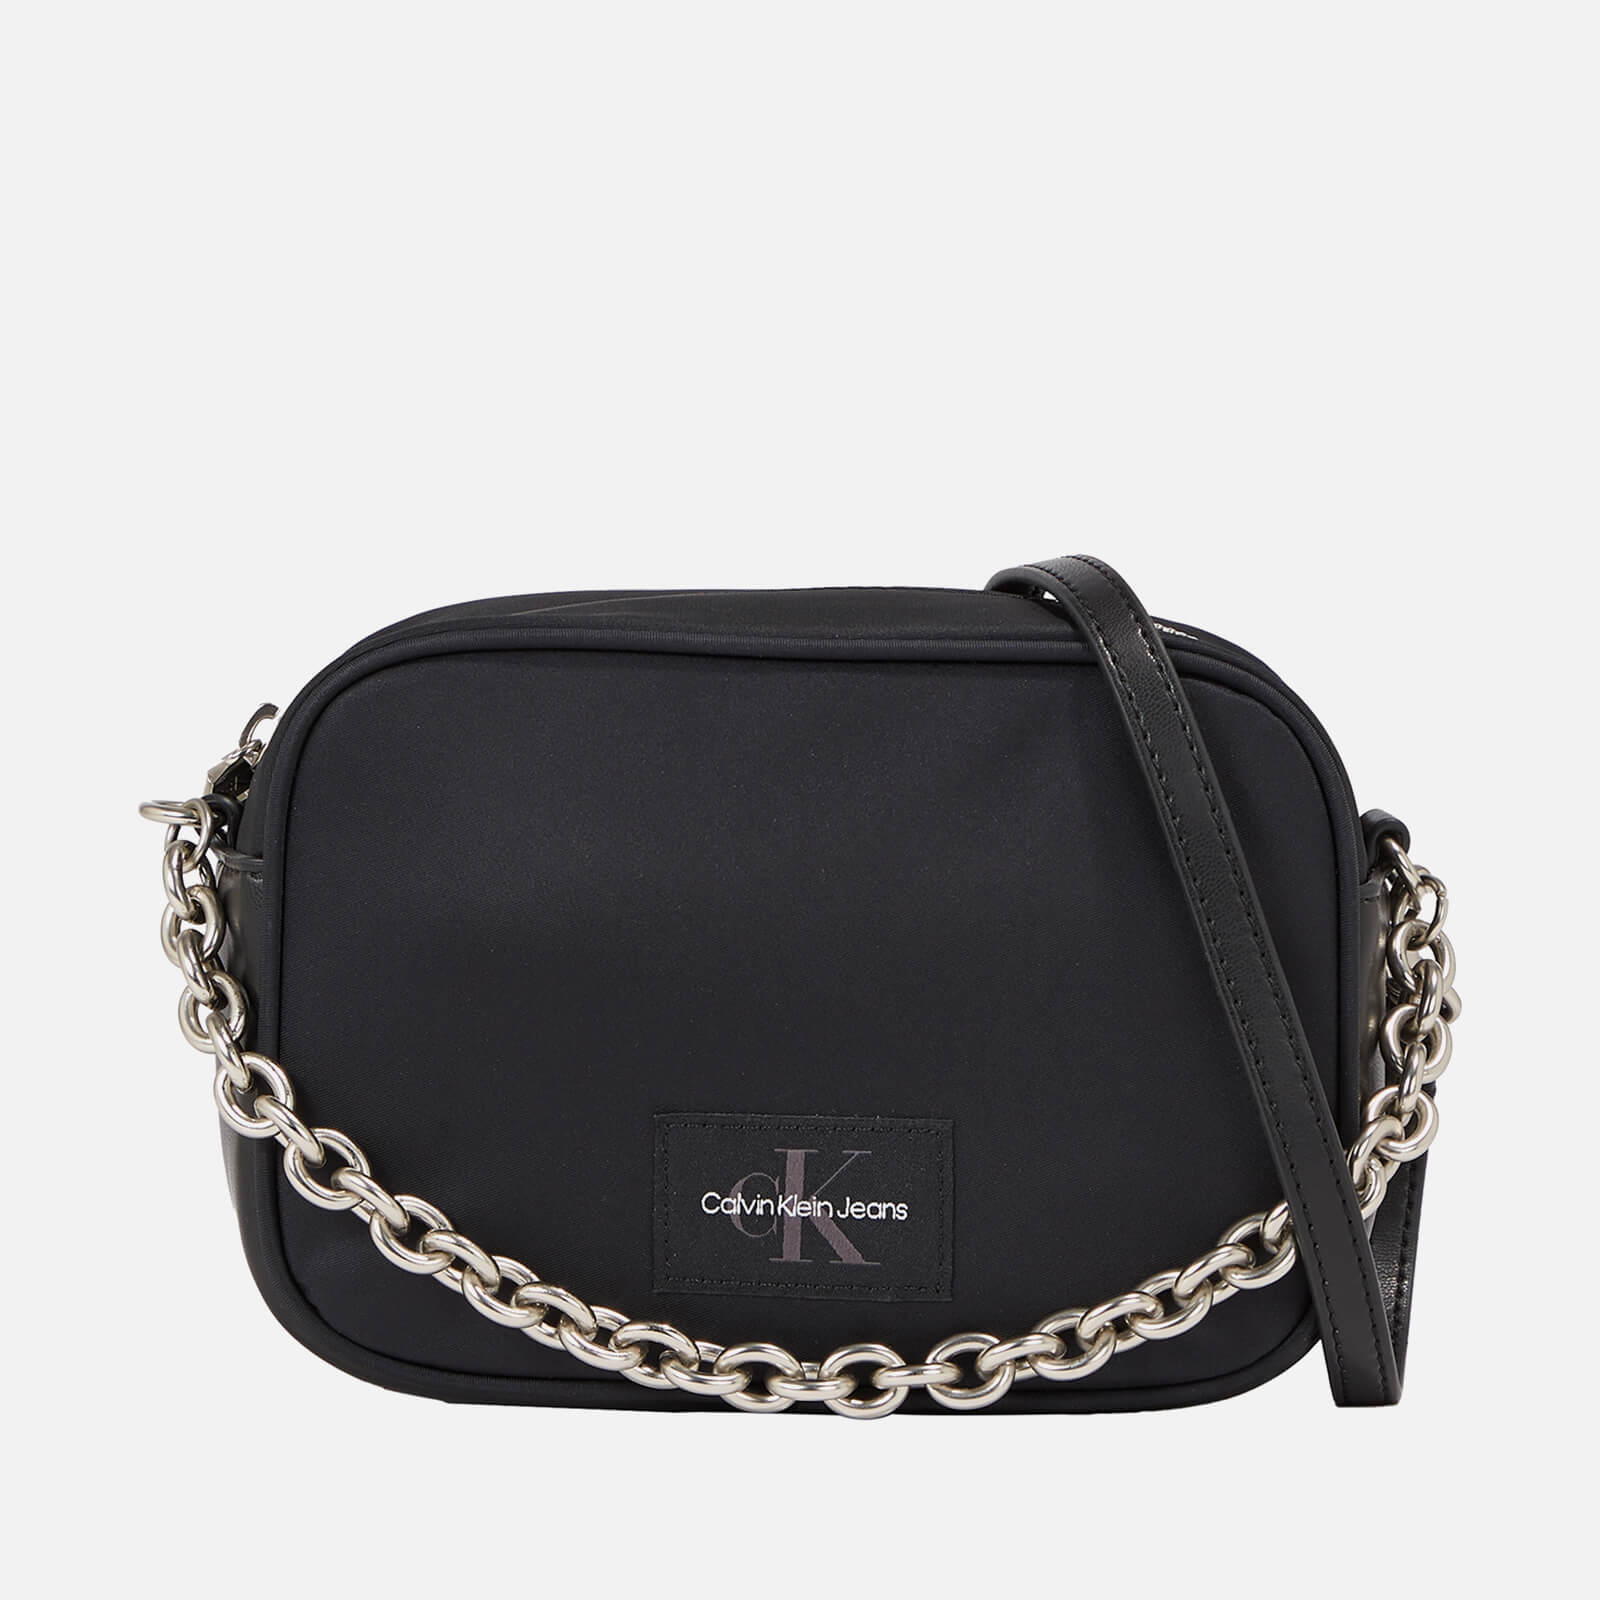 Calvin Klein Jeans Women's Nylon Chain Camera Bag - Black